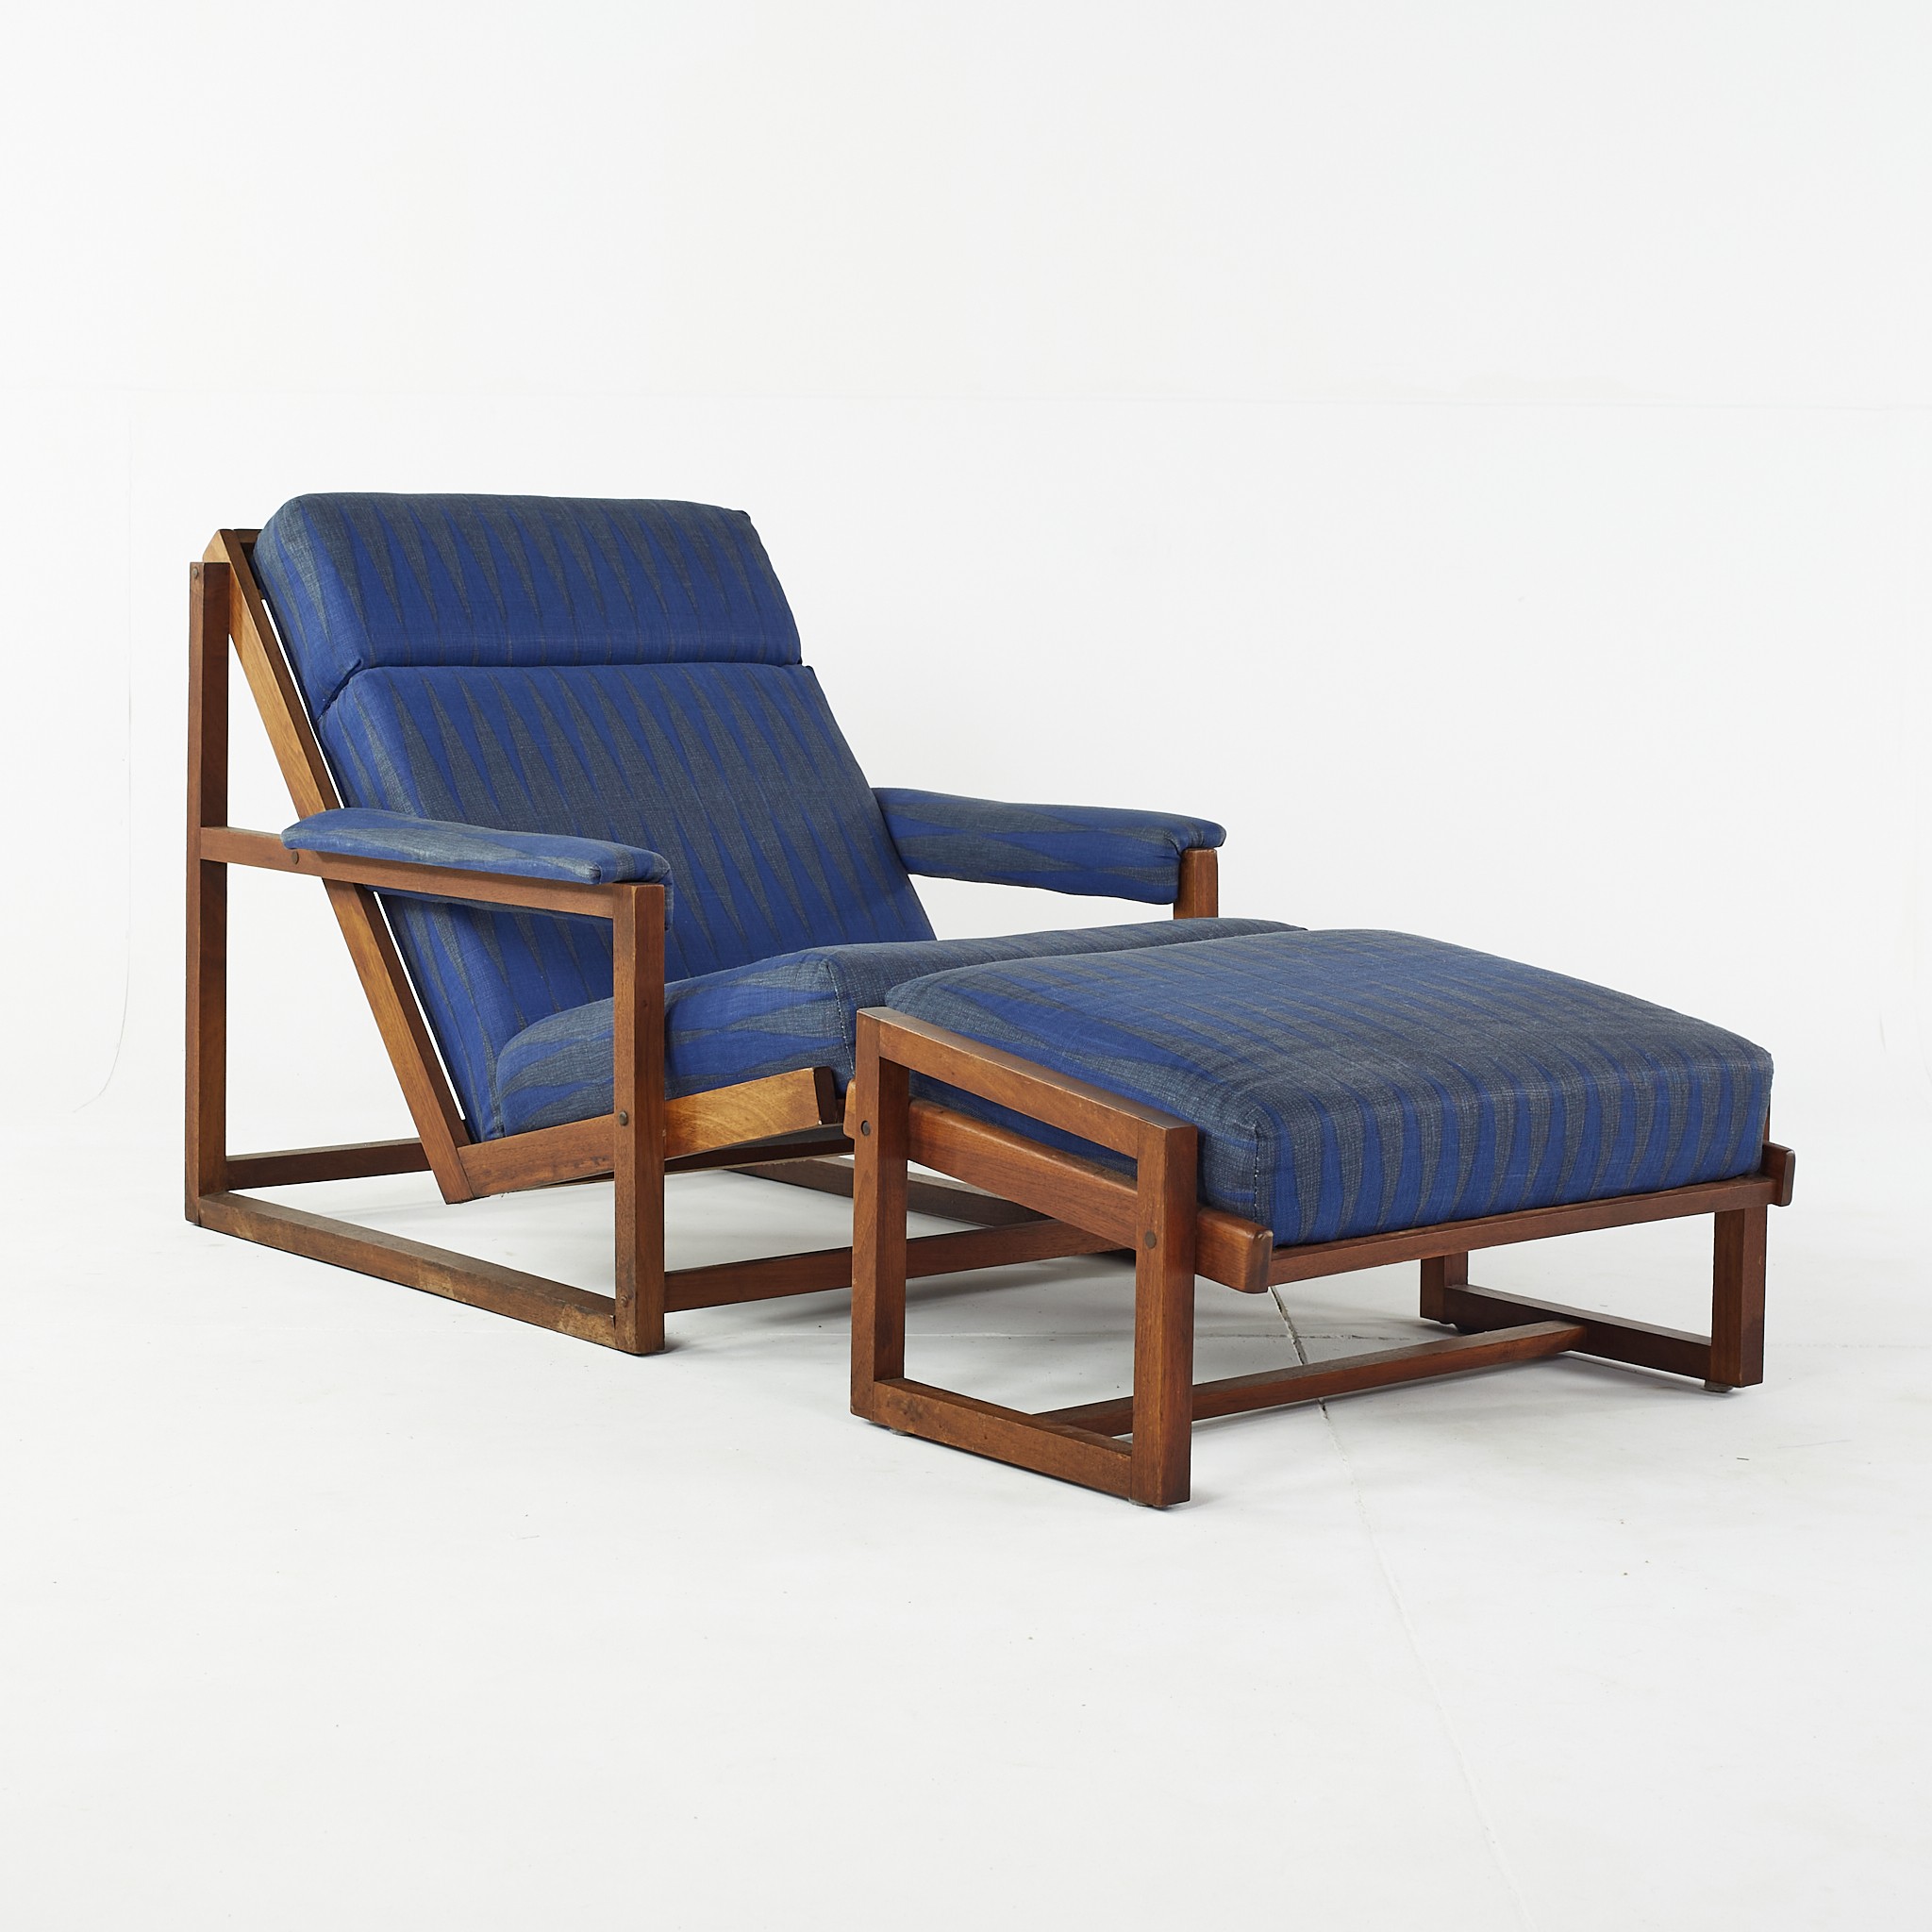 Jens Risom Style Mid Century Walnut Chair and Ottoman